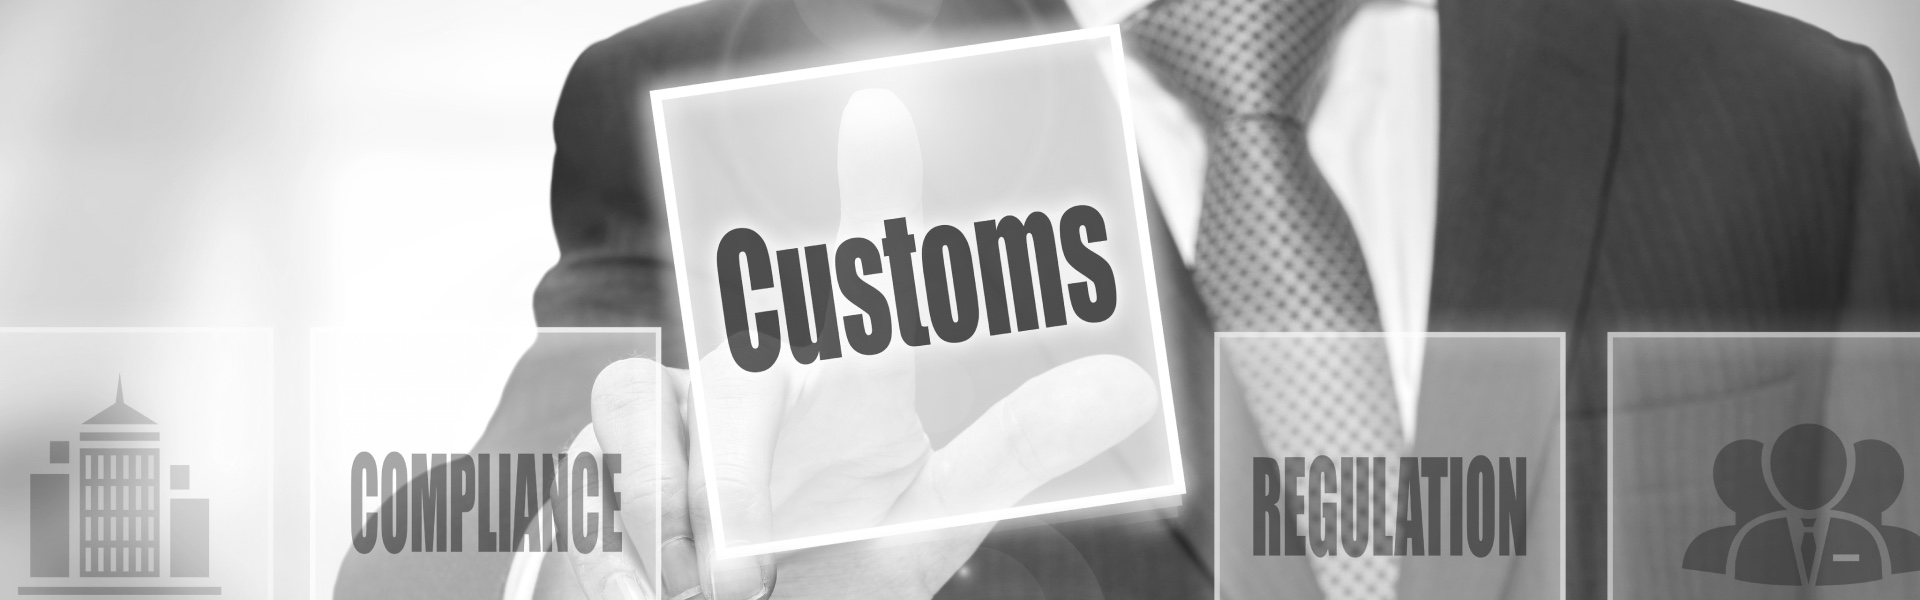 solution-customs